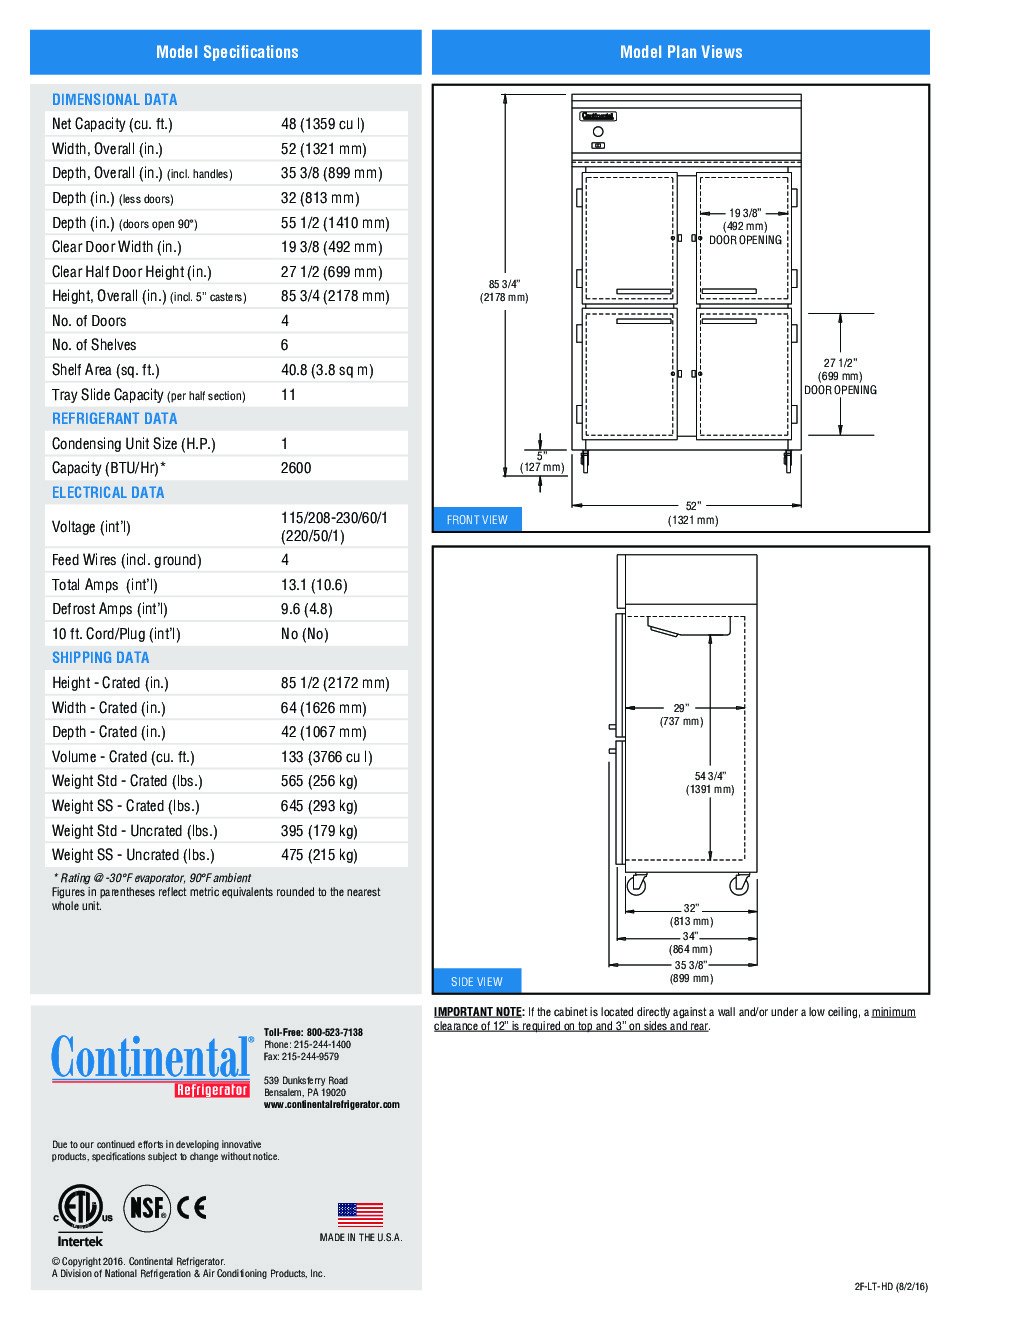 Continental Refrigerator 2F-LT-HD Reach-In Low Temperature Freezer